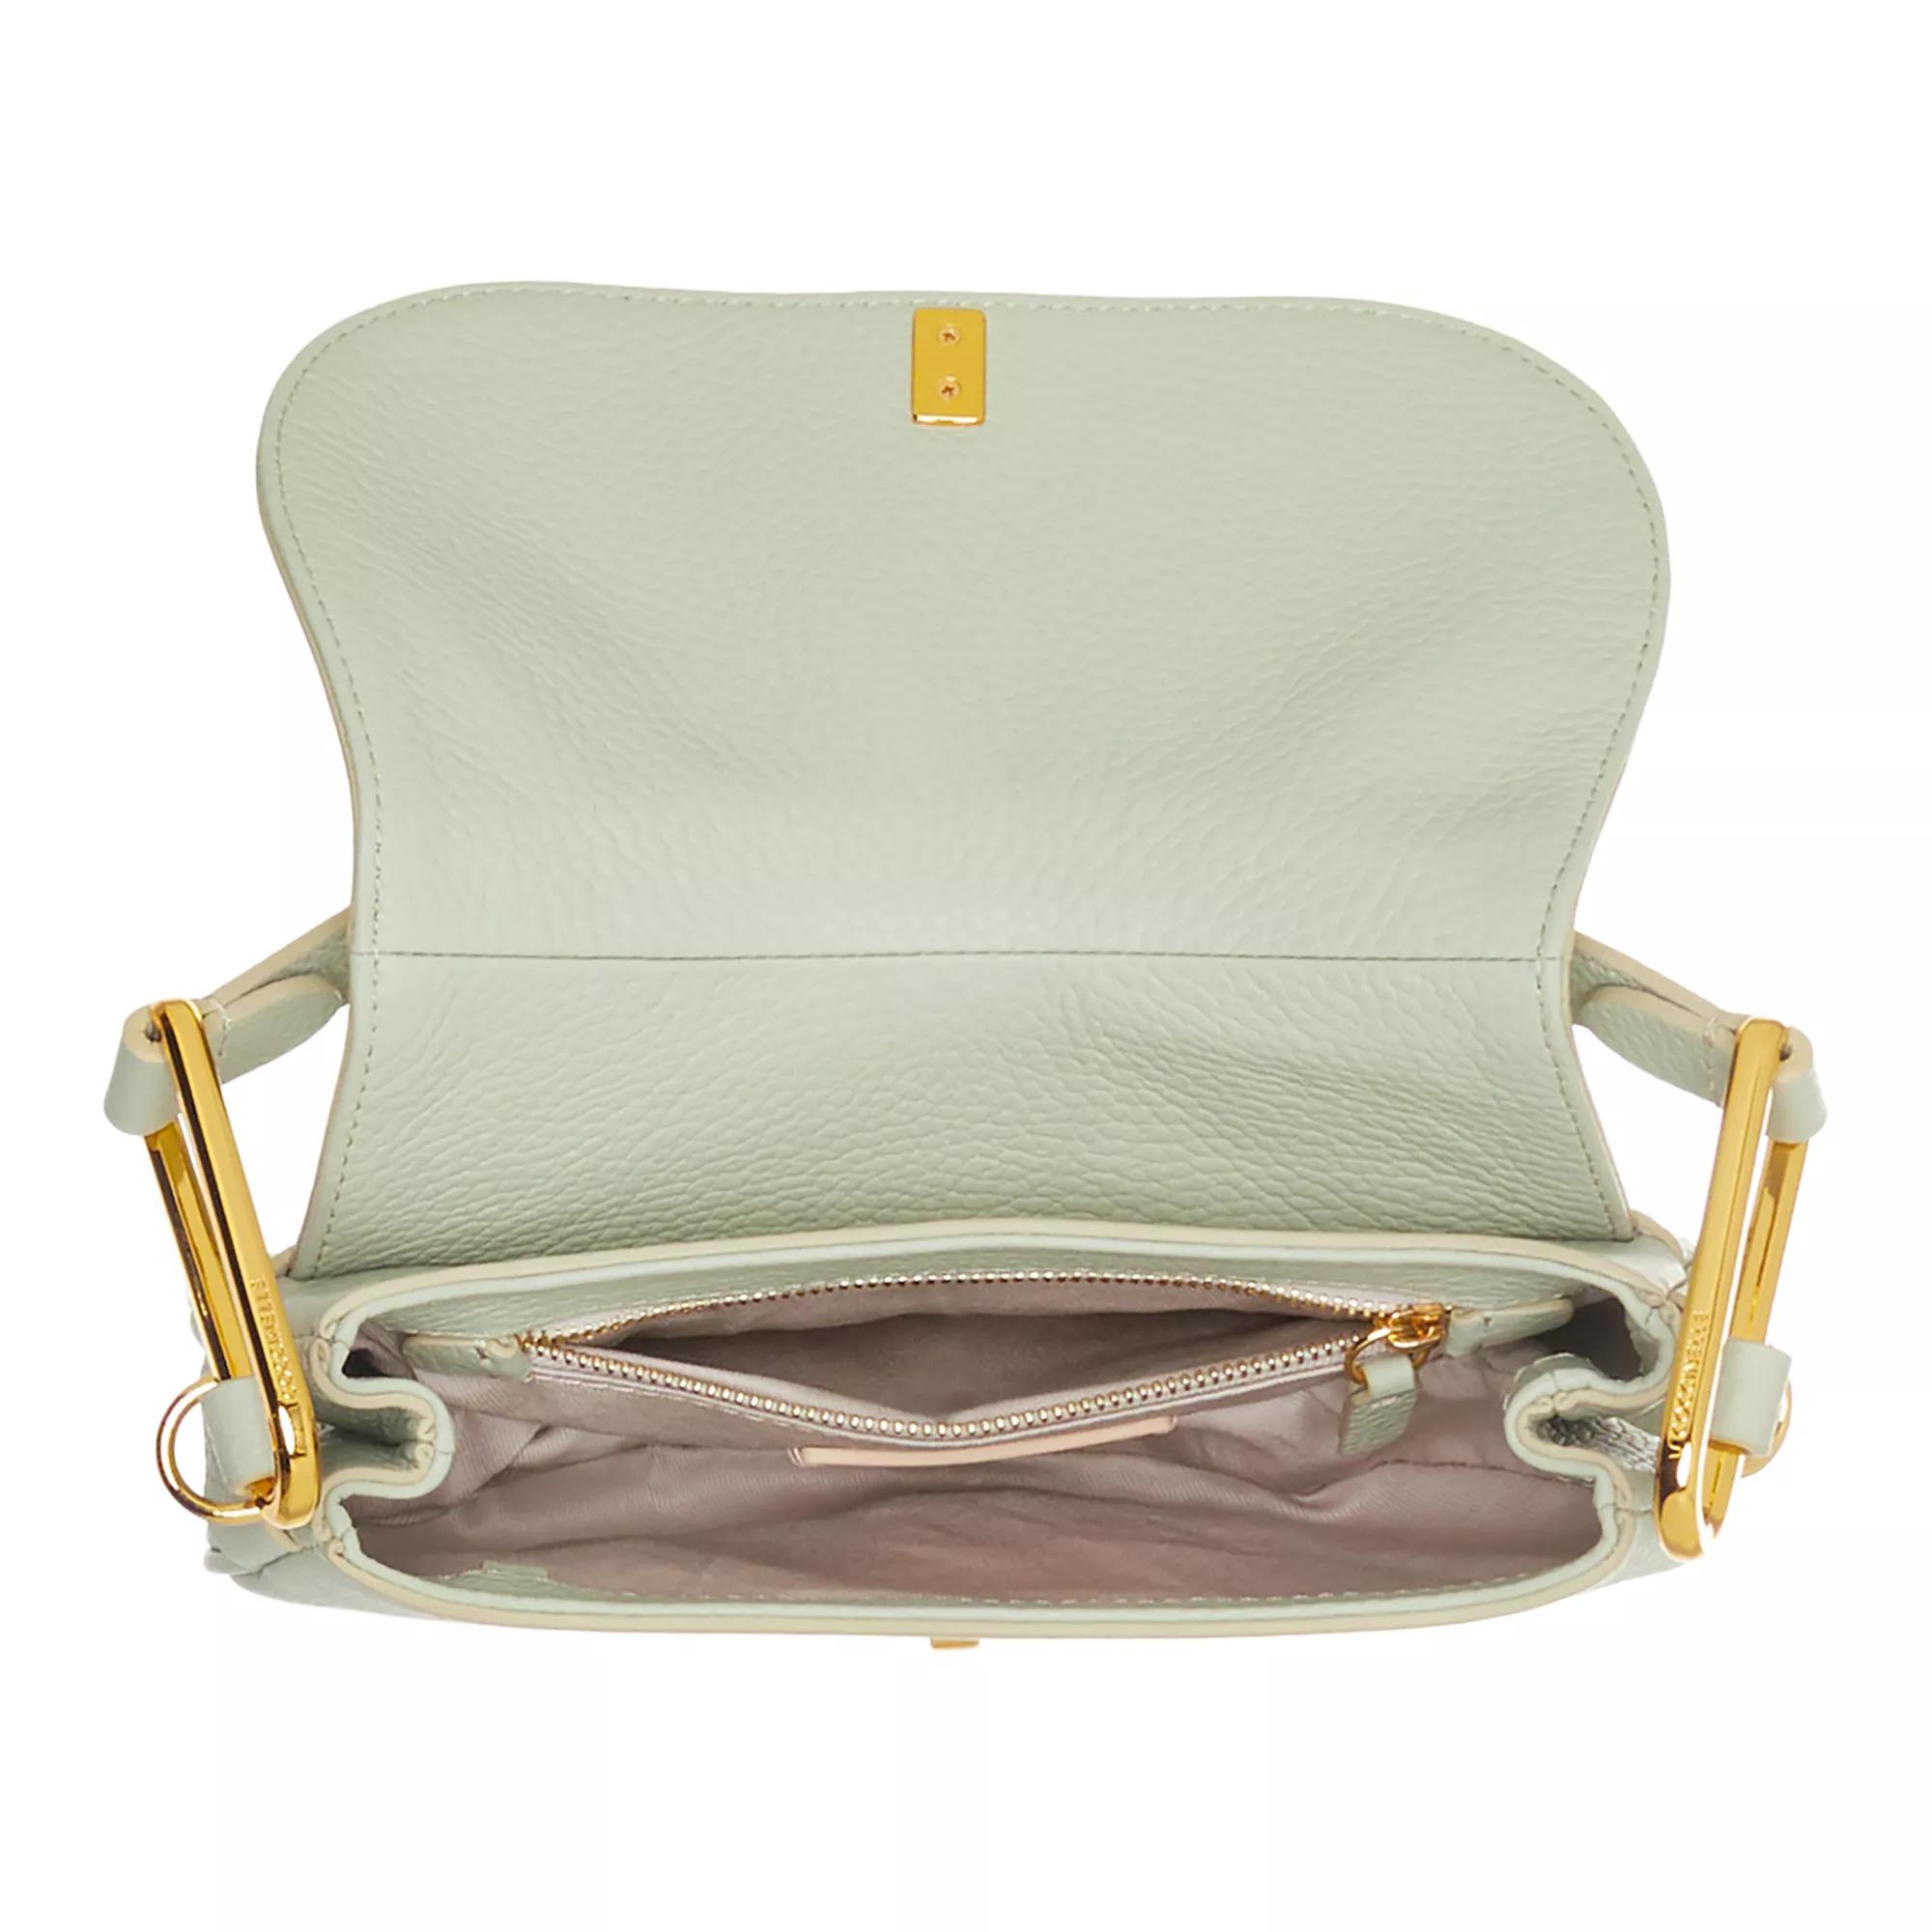 Coccinelle Satchels Magie Soft Handbag in groen